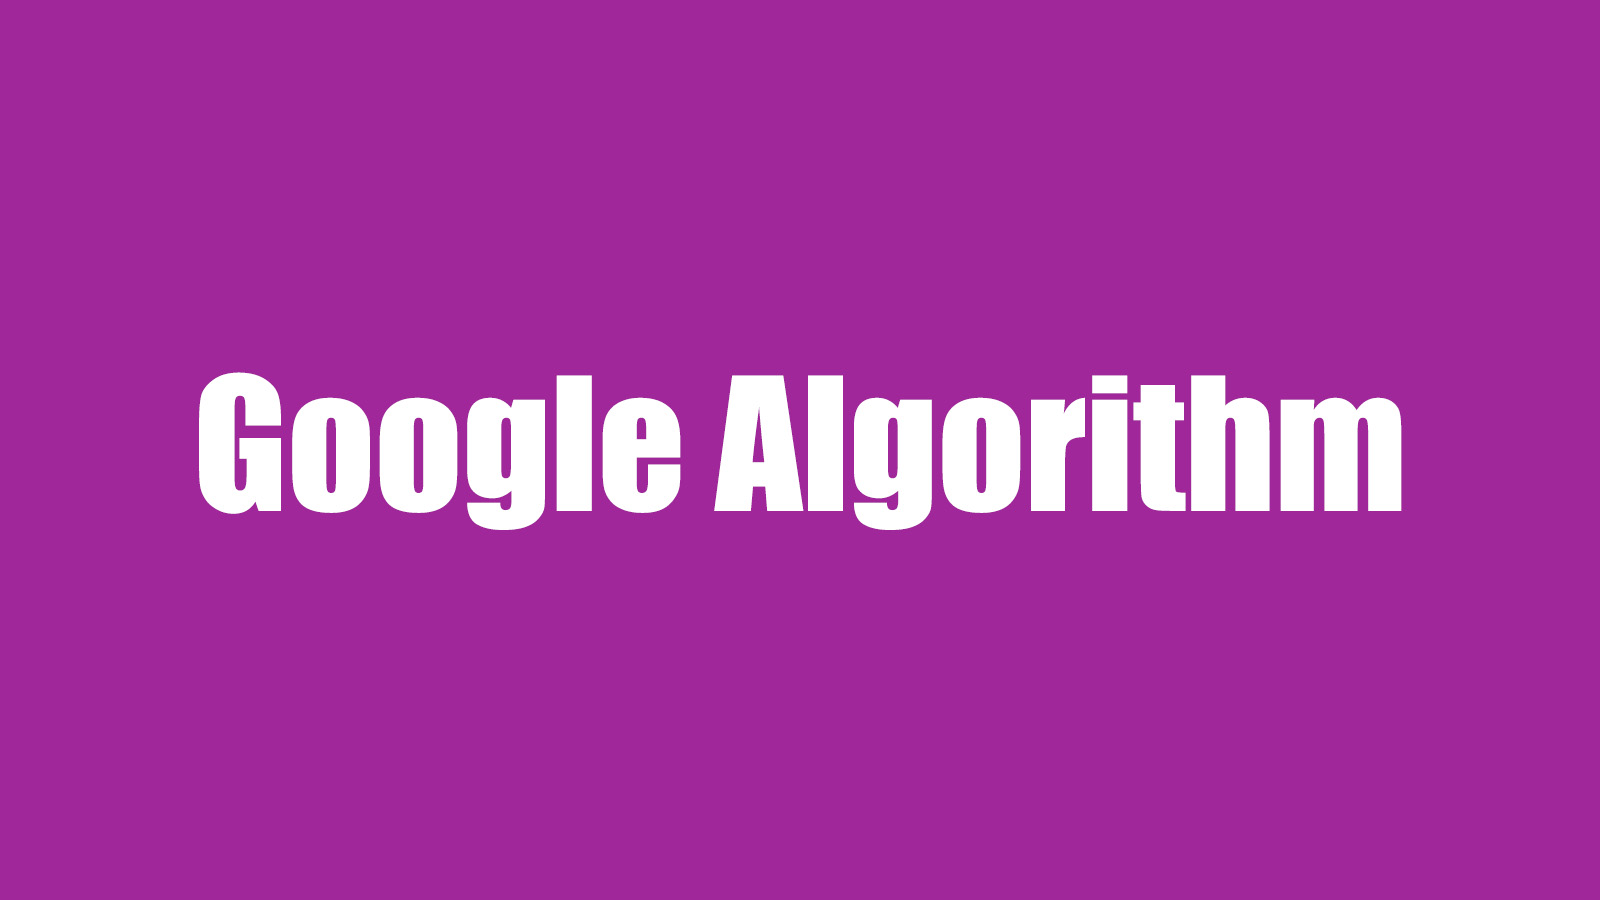 Google_Algorithm